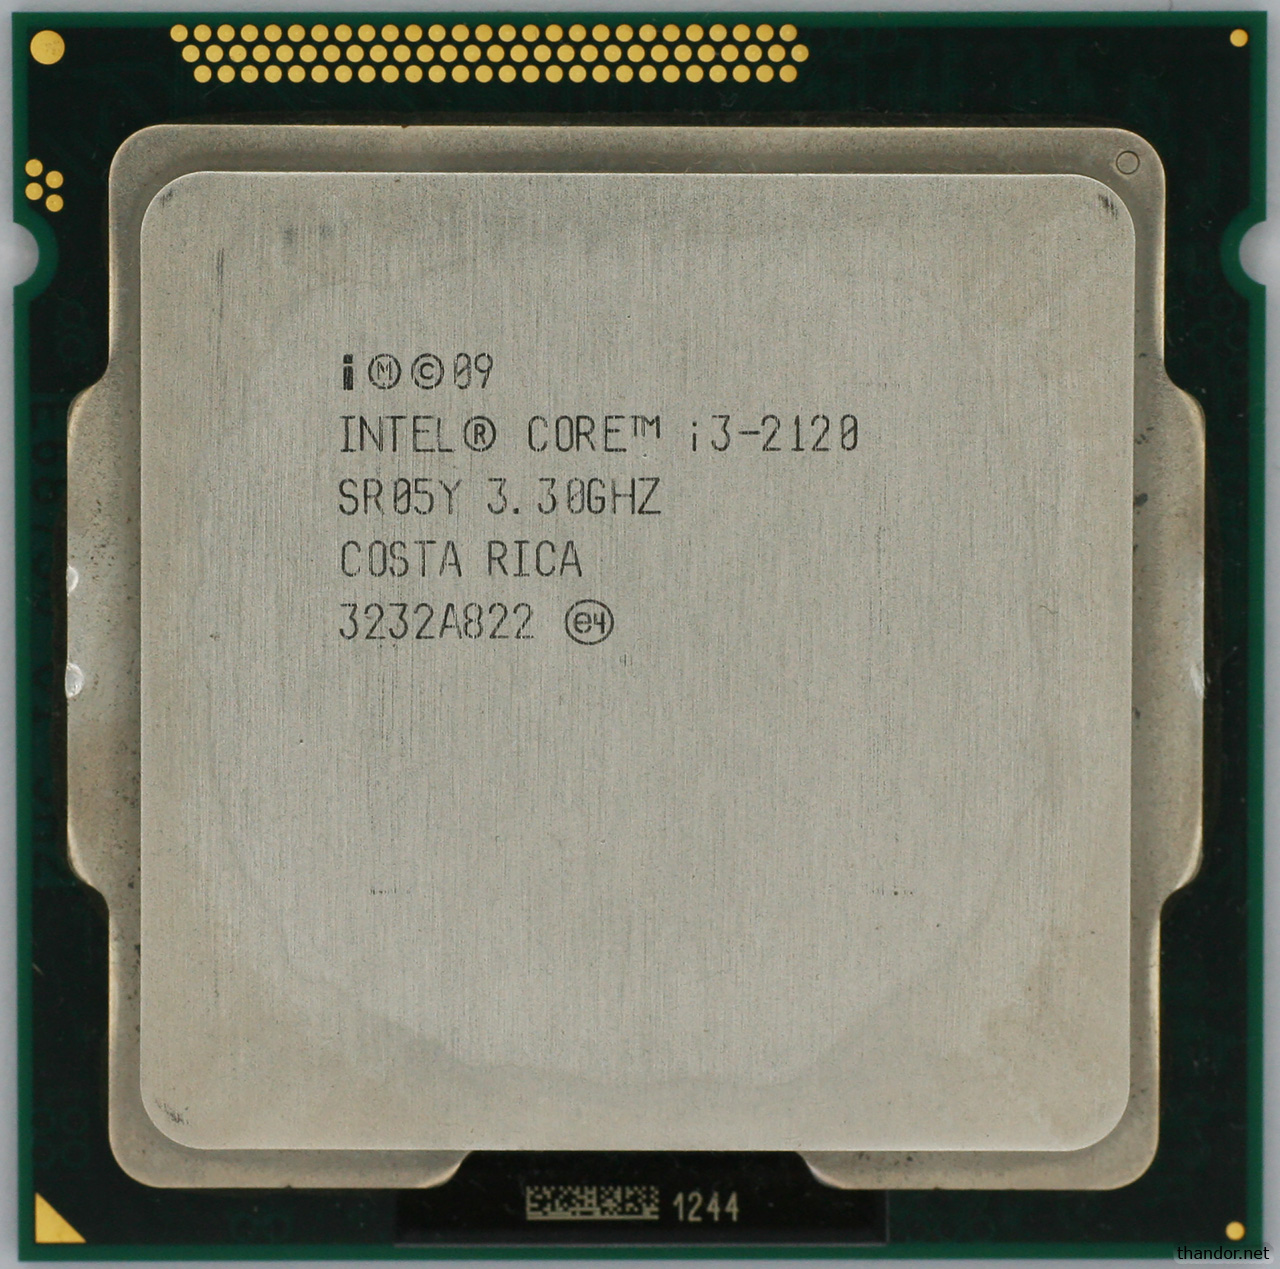 Intel(r) Core(TM) i3-2120 CPU @ 3.30GHZ 3.30 GHZ. Характеристики ноутбучного Intel i3-2120m.